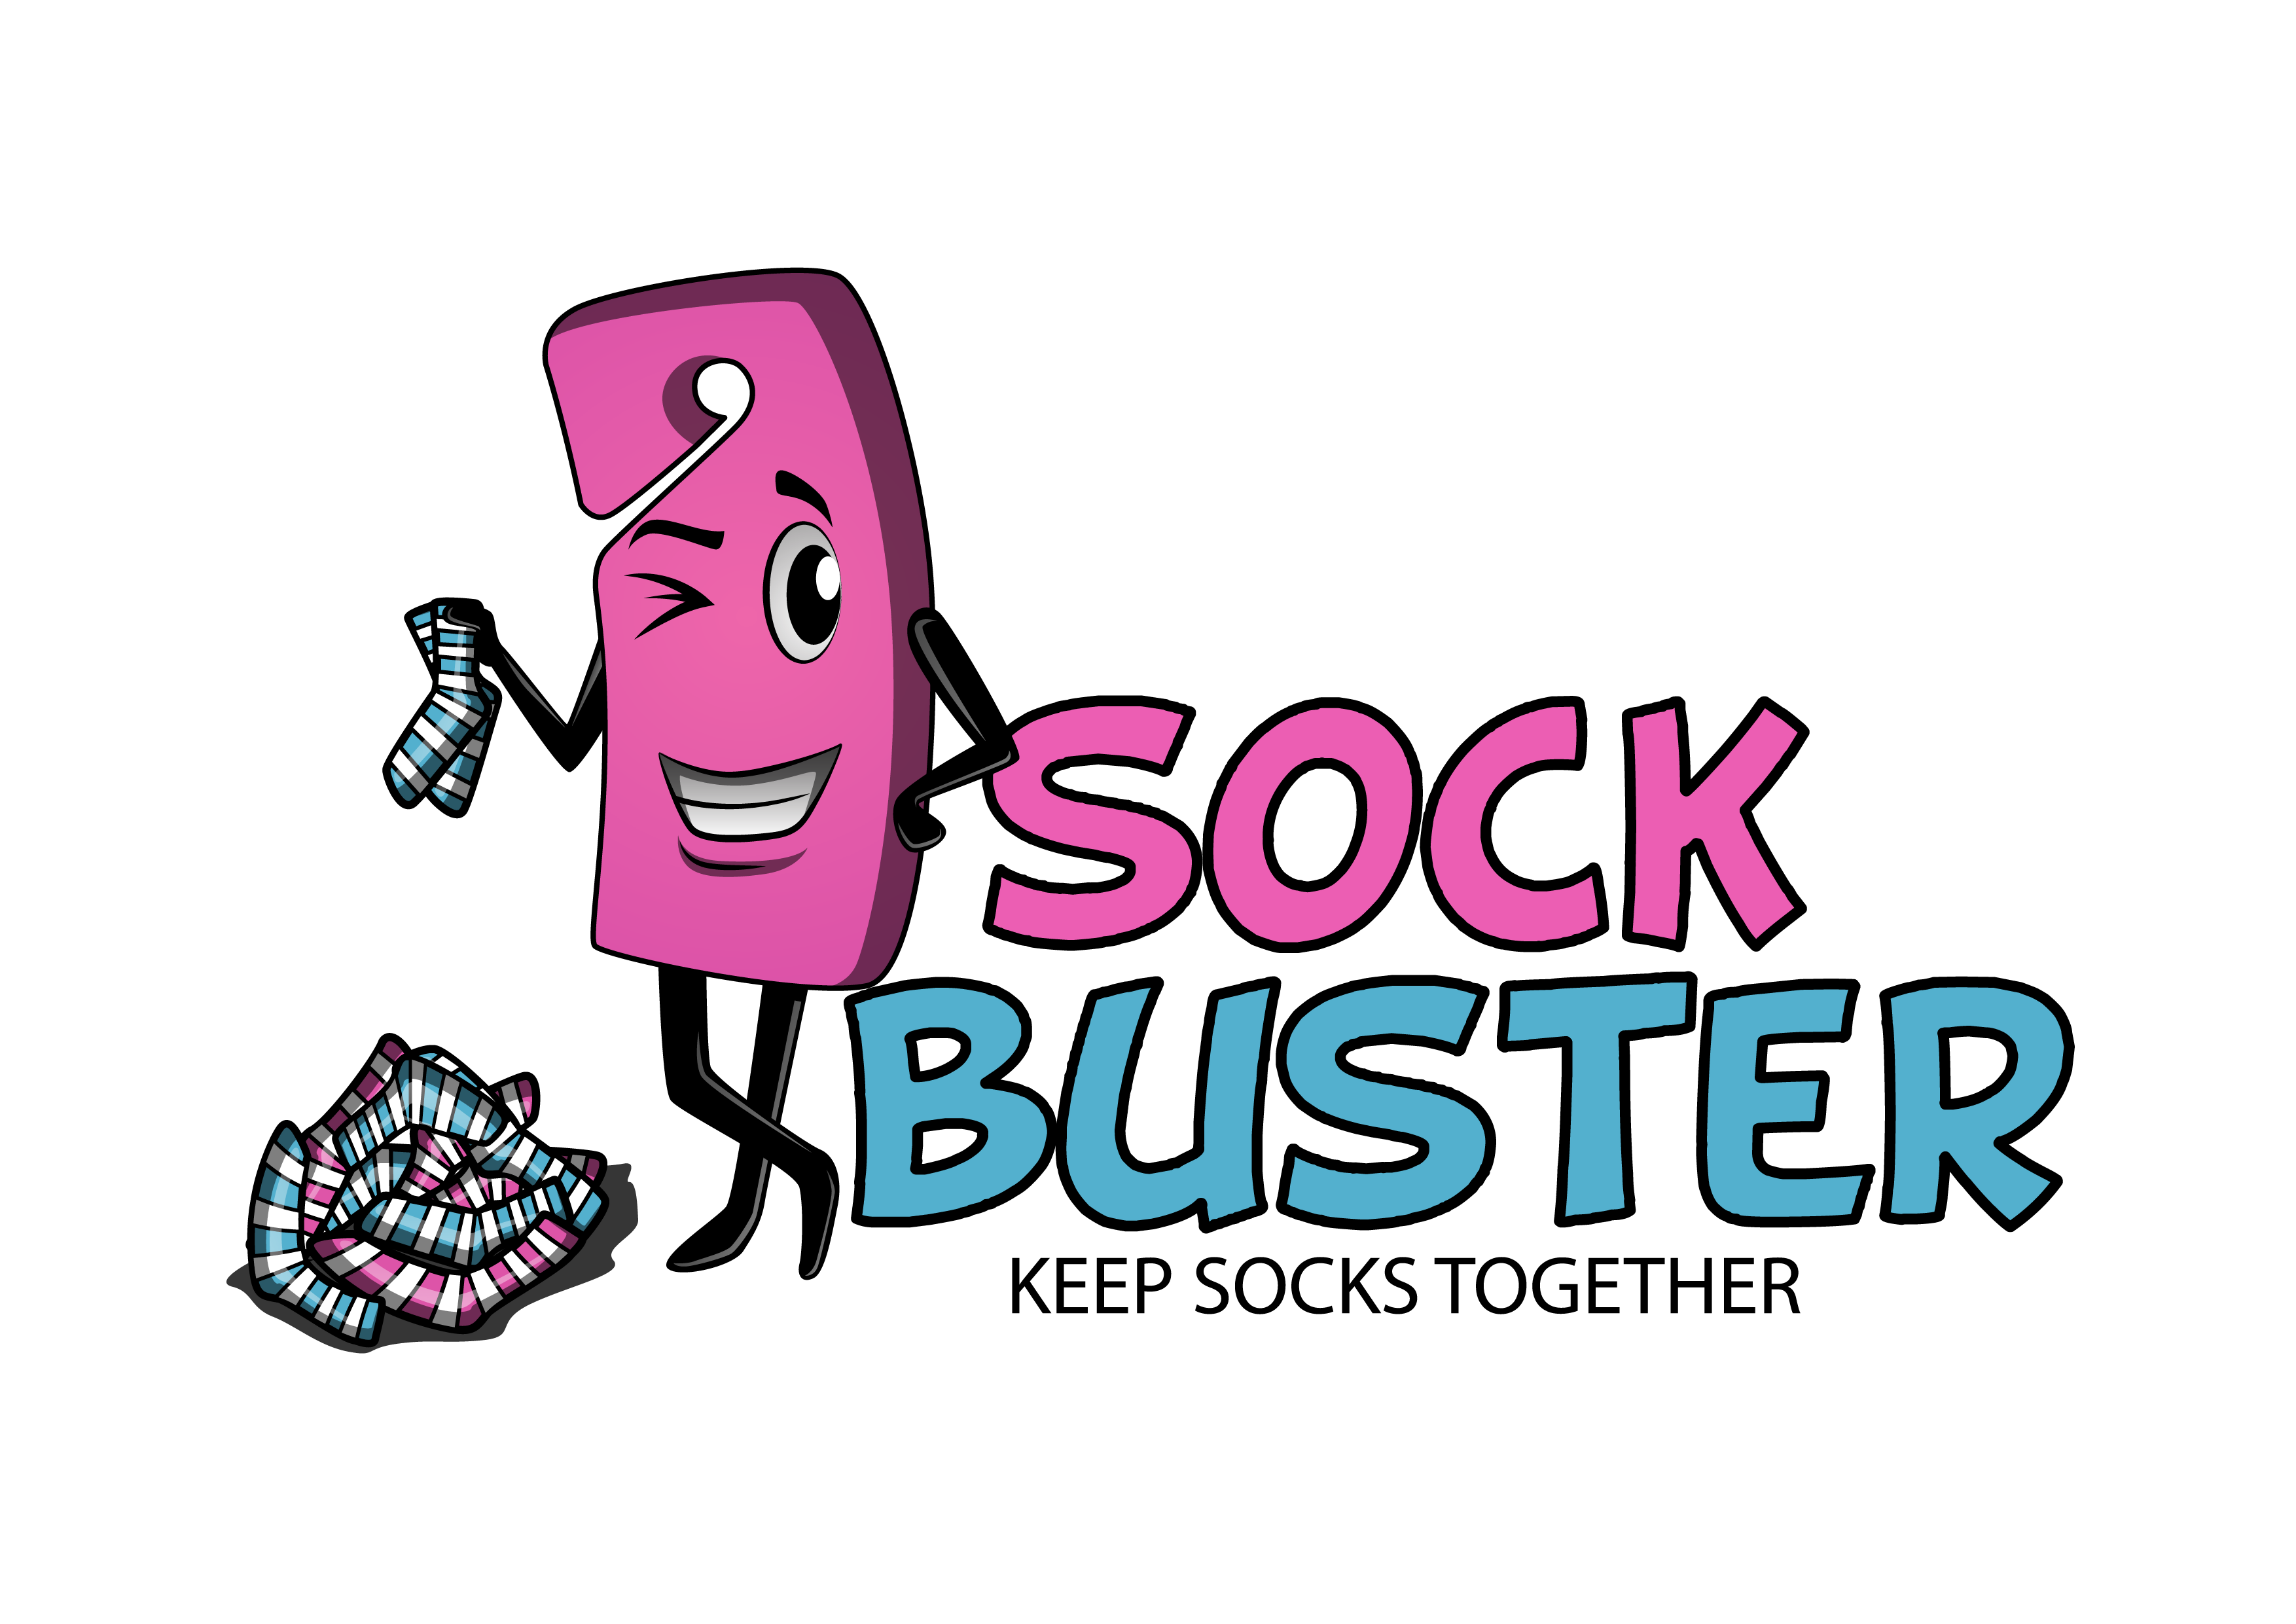 Sockbuster